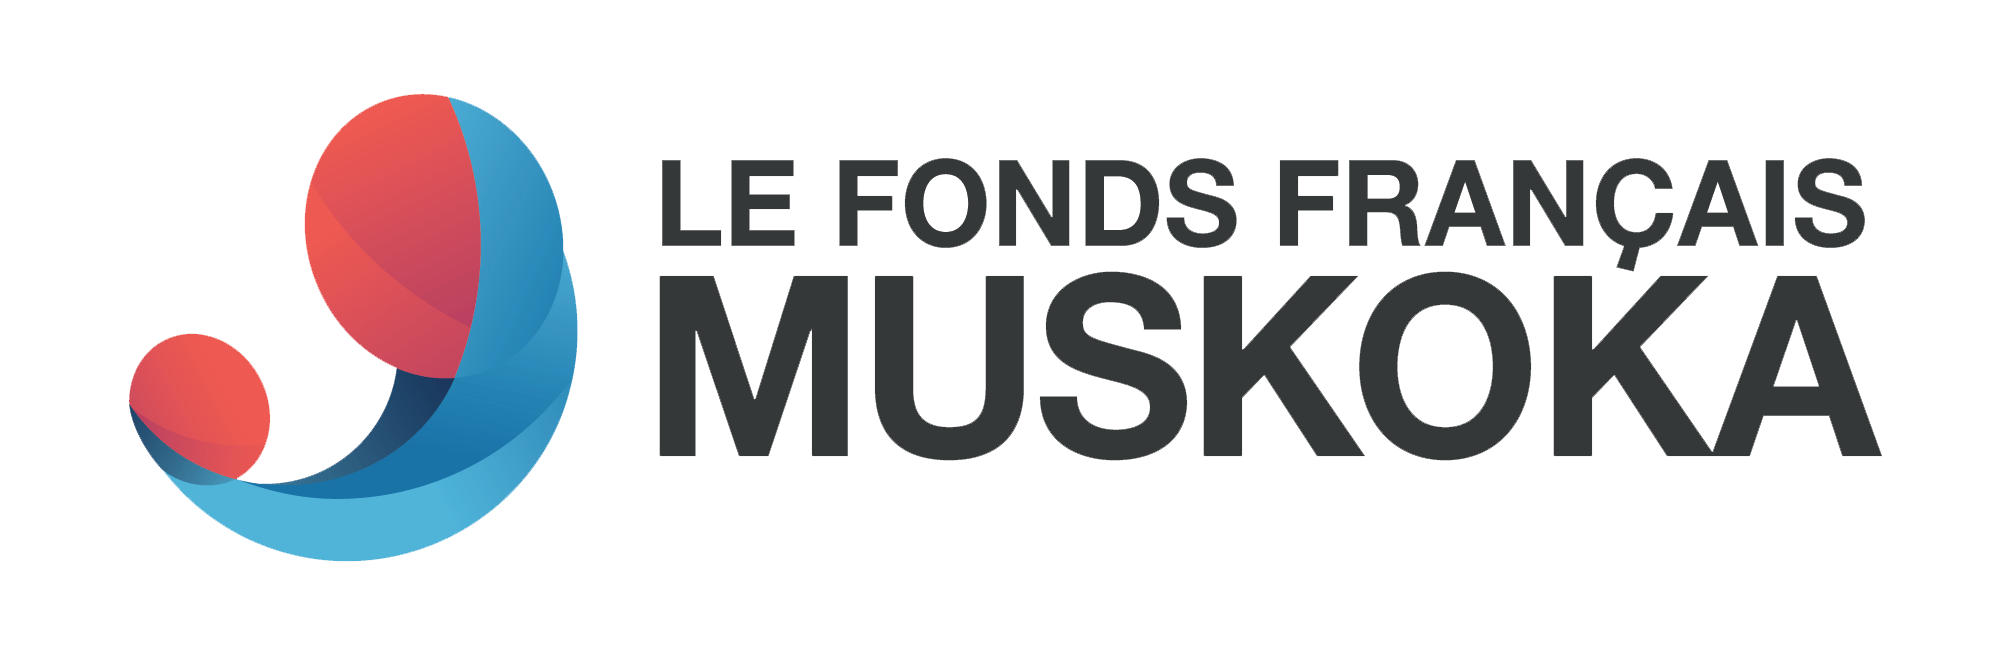 Le Fonds Francais Muskoka